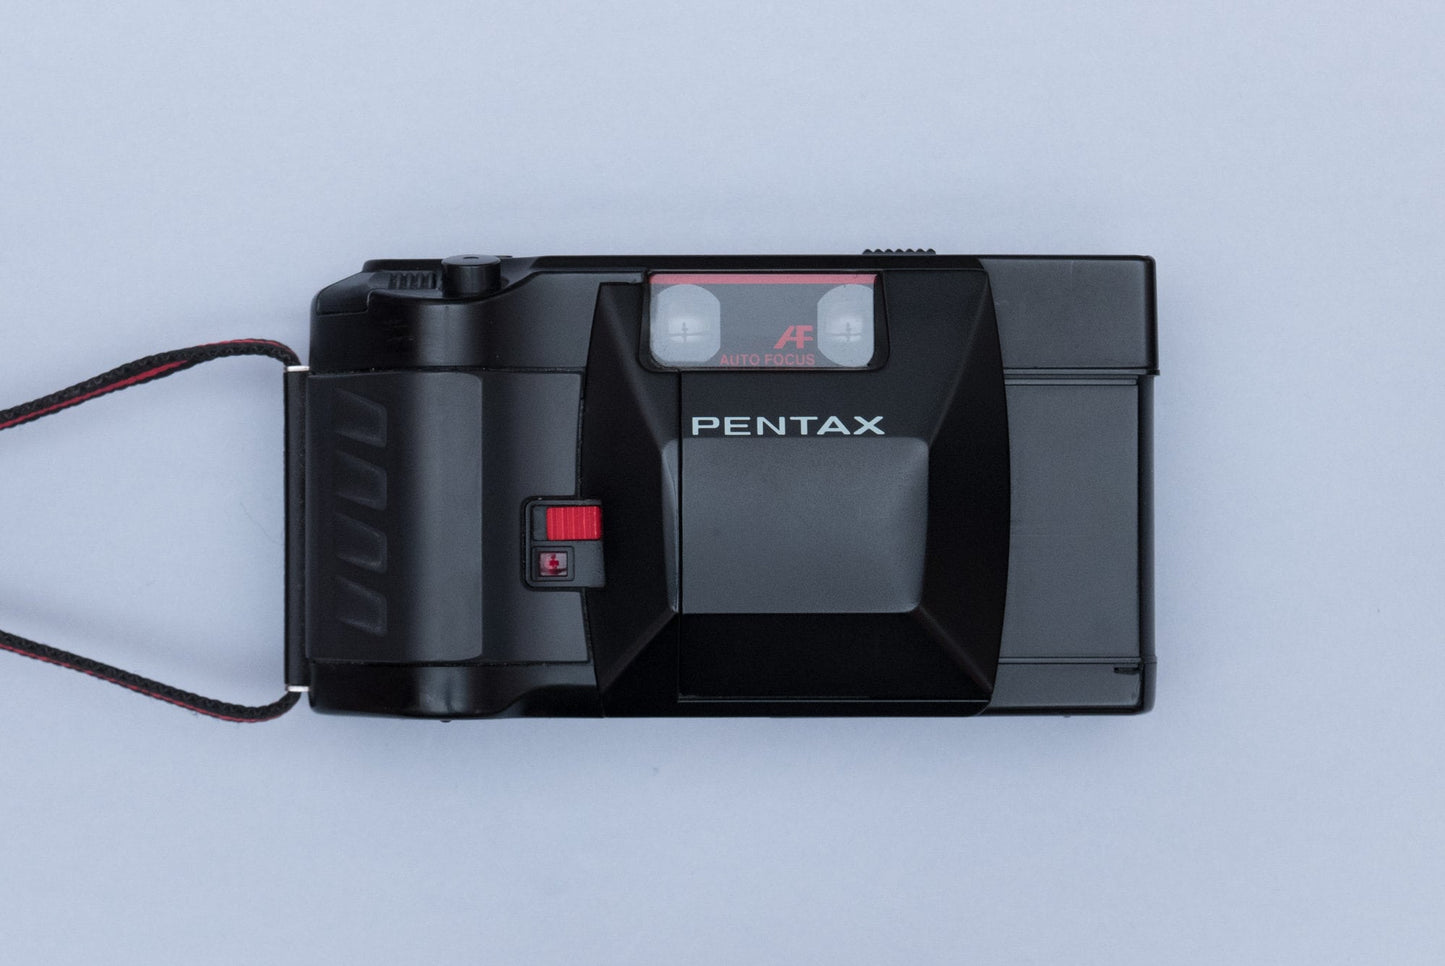 Pentax PC35 AF-M SE Compact 35mm Film Camera